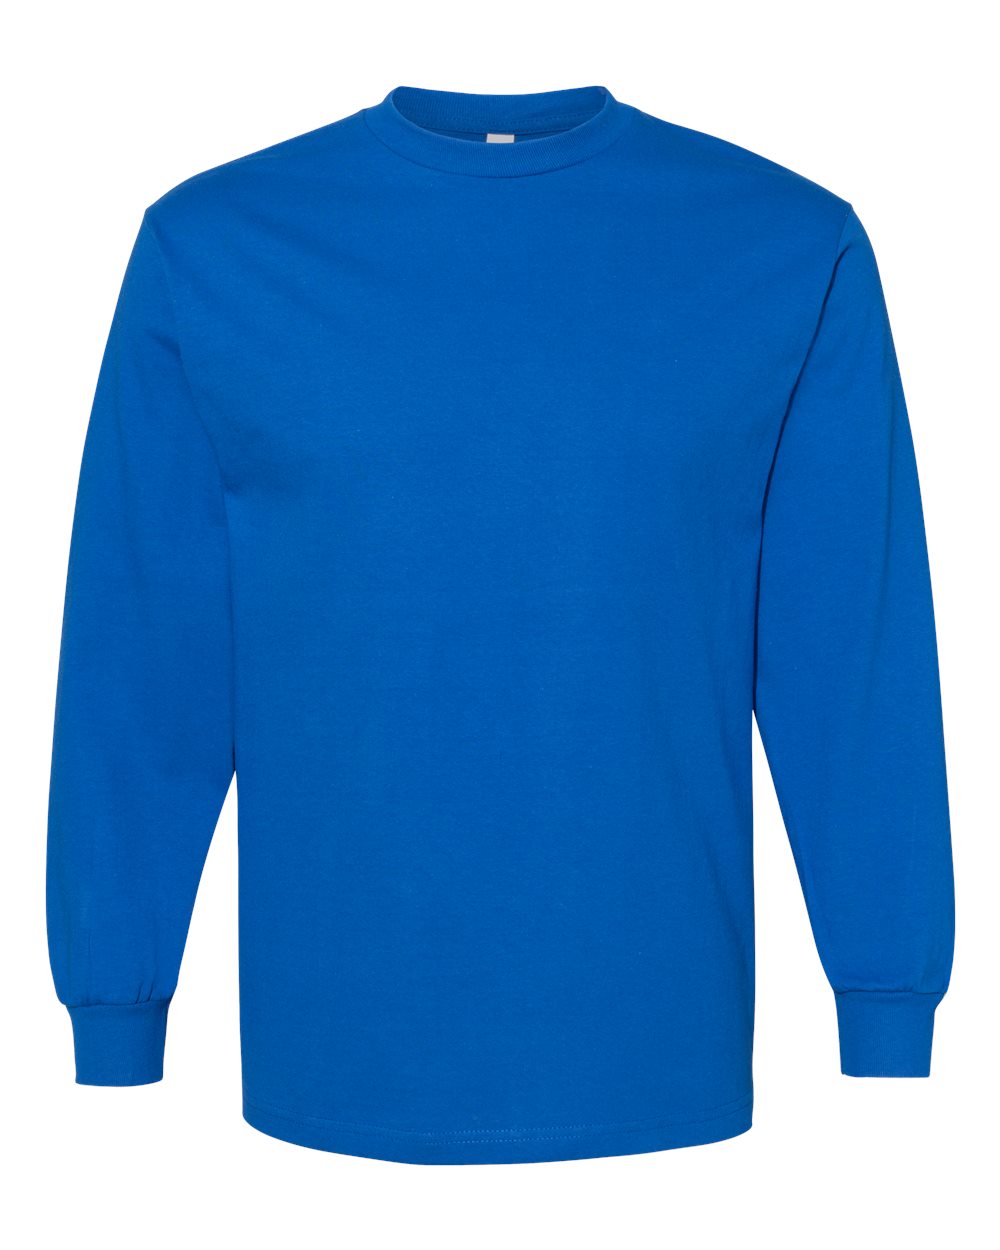 American Apparel Unisex Heavyweight Cotton Long Sleeve Tee 1304 #color_Royal Blue